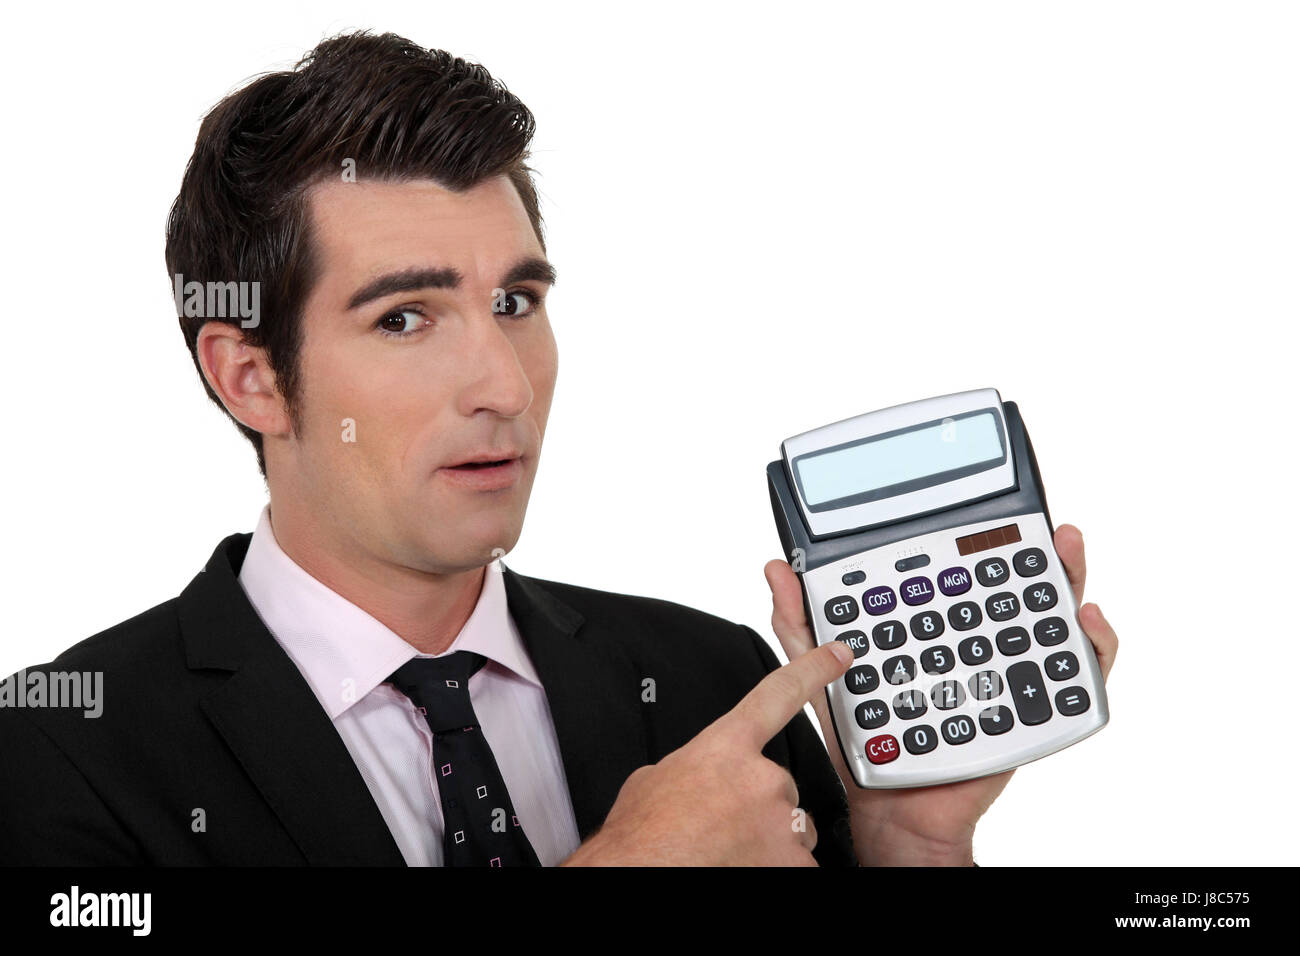 guy, career, isolated, modern, modernity, calculator, male, masculine Stock  Photo - Alamy